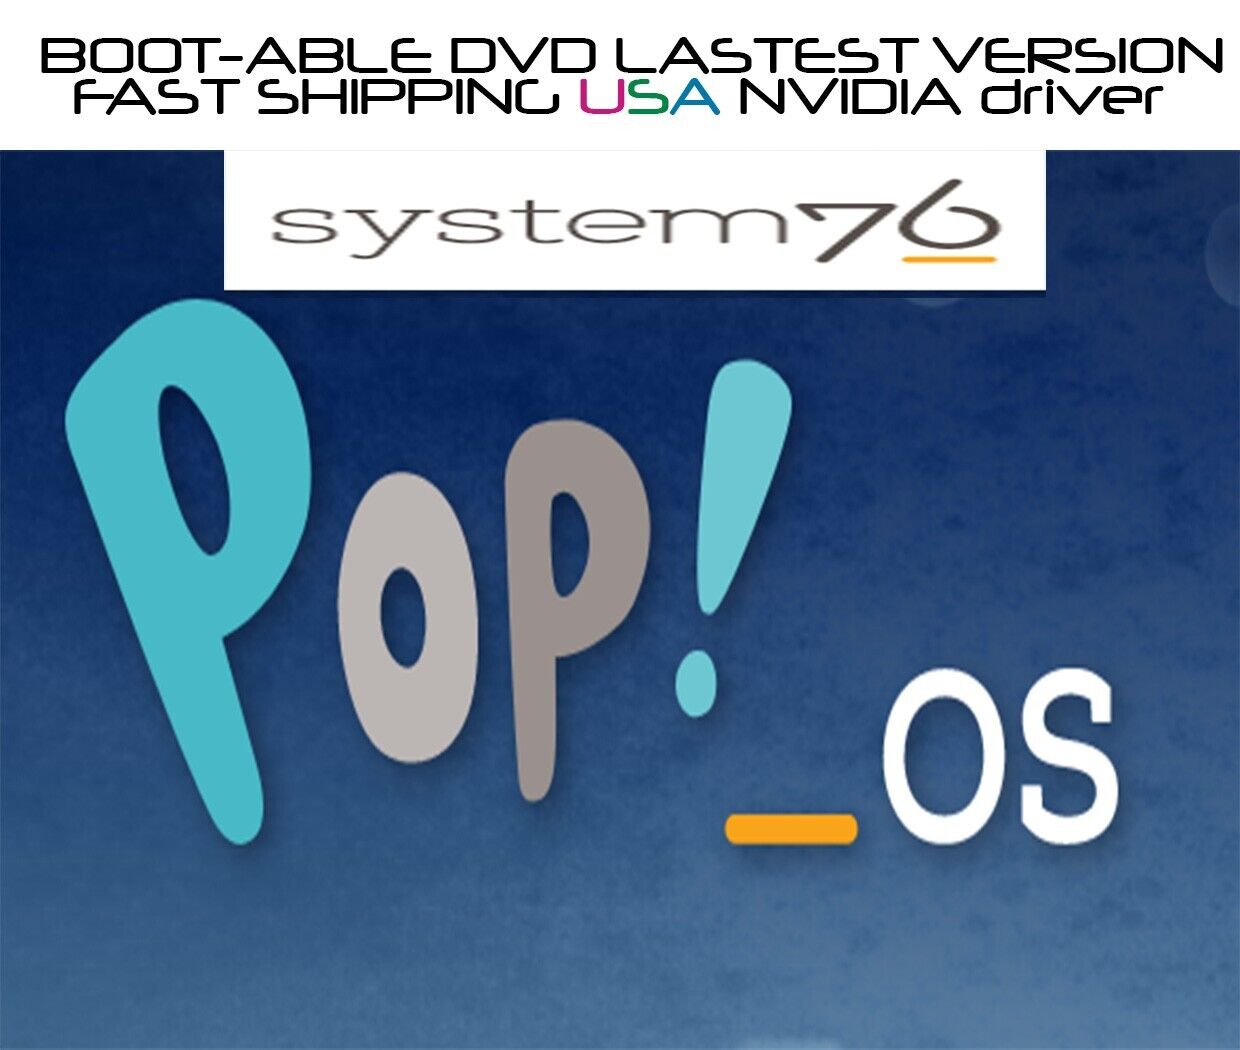 POP OS System 76 22.04 LTS NVidia/Intel DVD SET #1 Seller SAME DAY SHIPPING USA